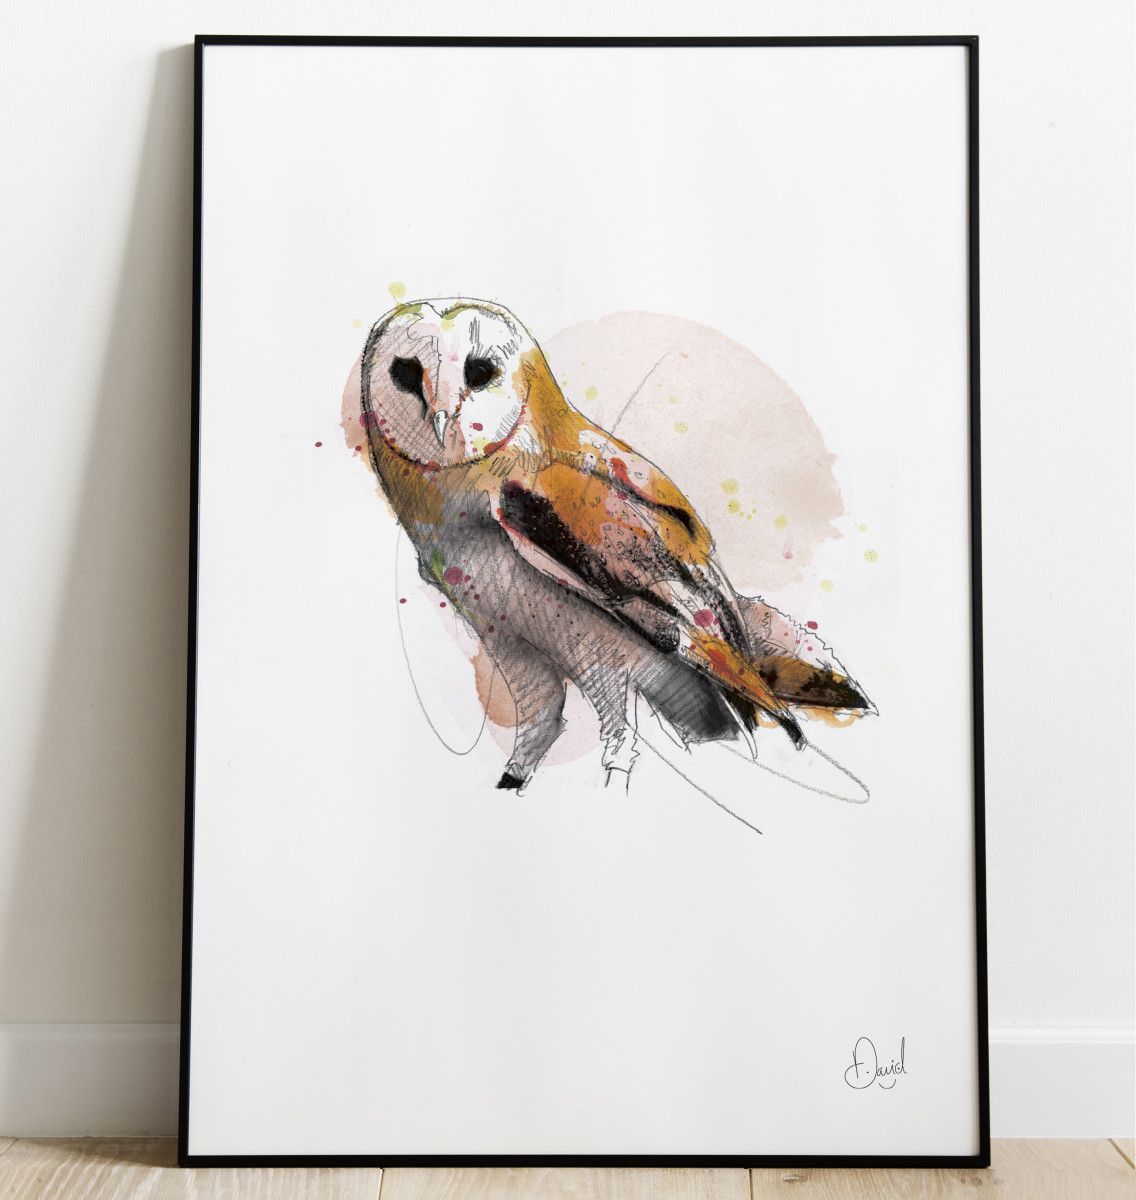 David Marston Art - The Wise Old Owl